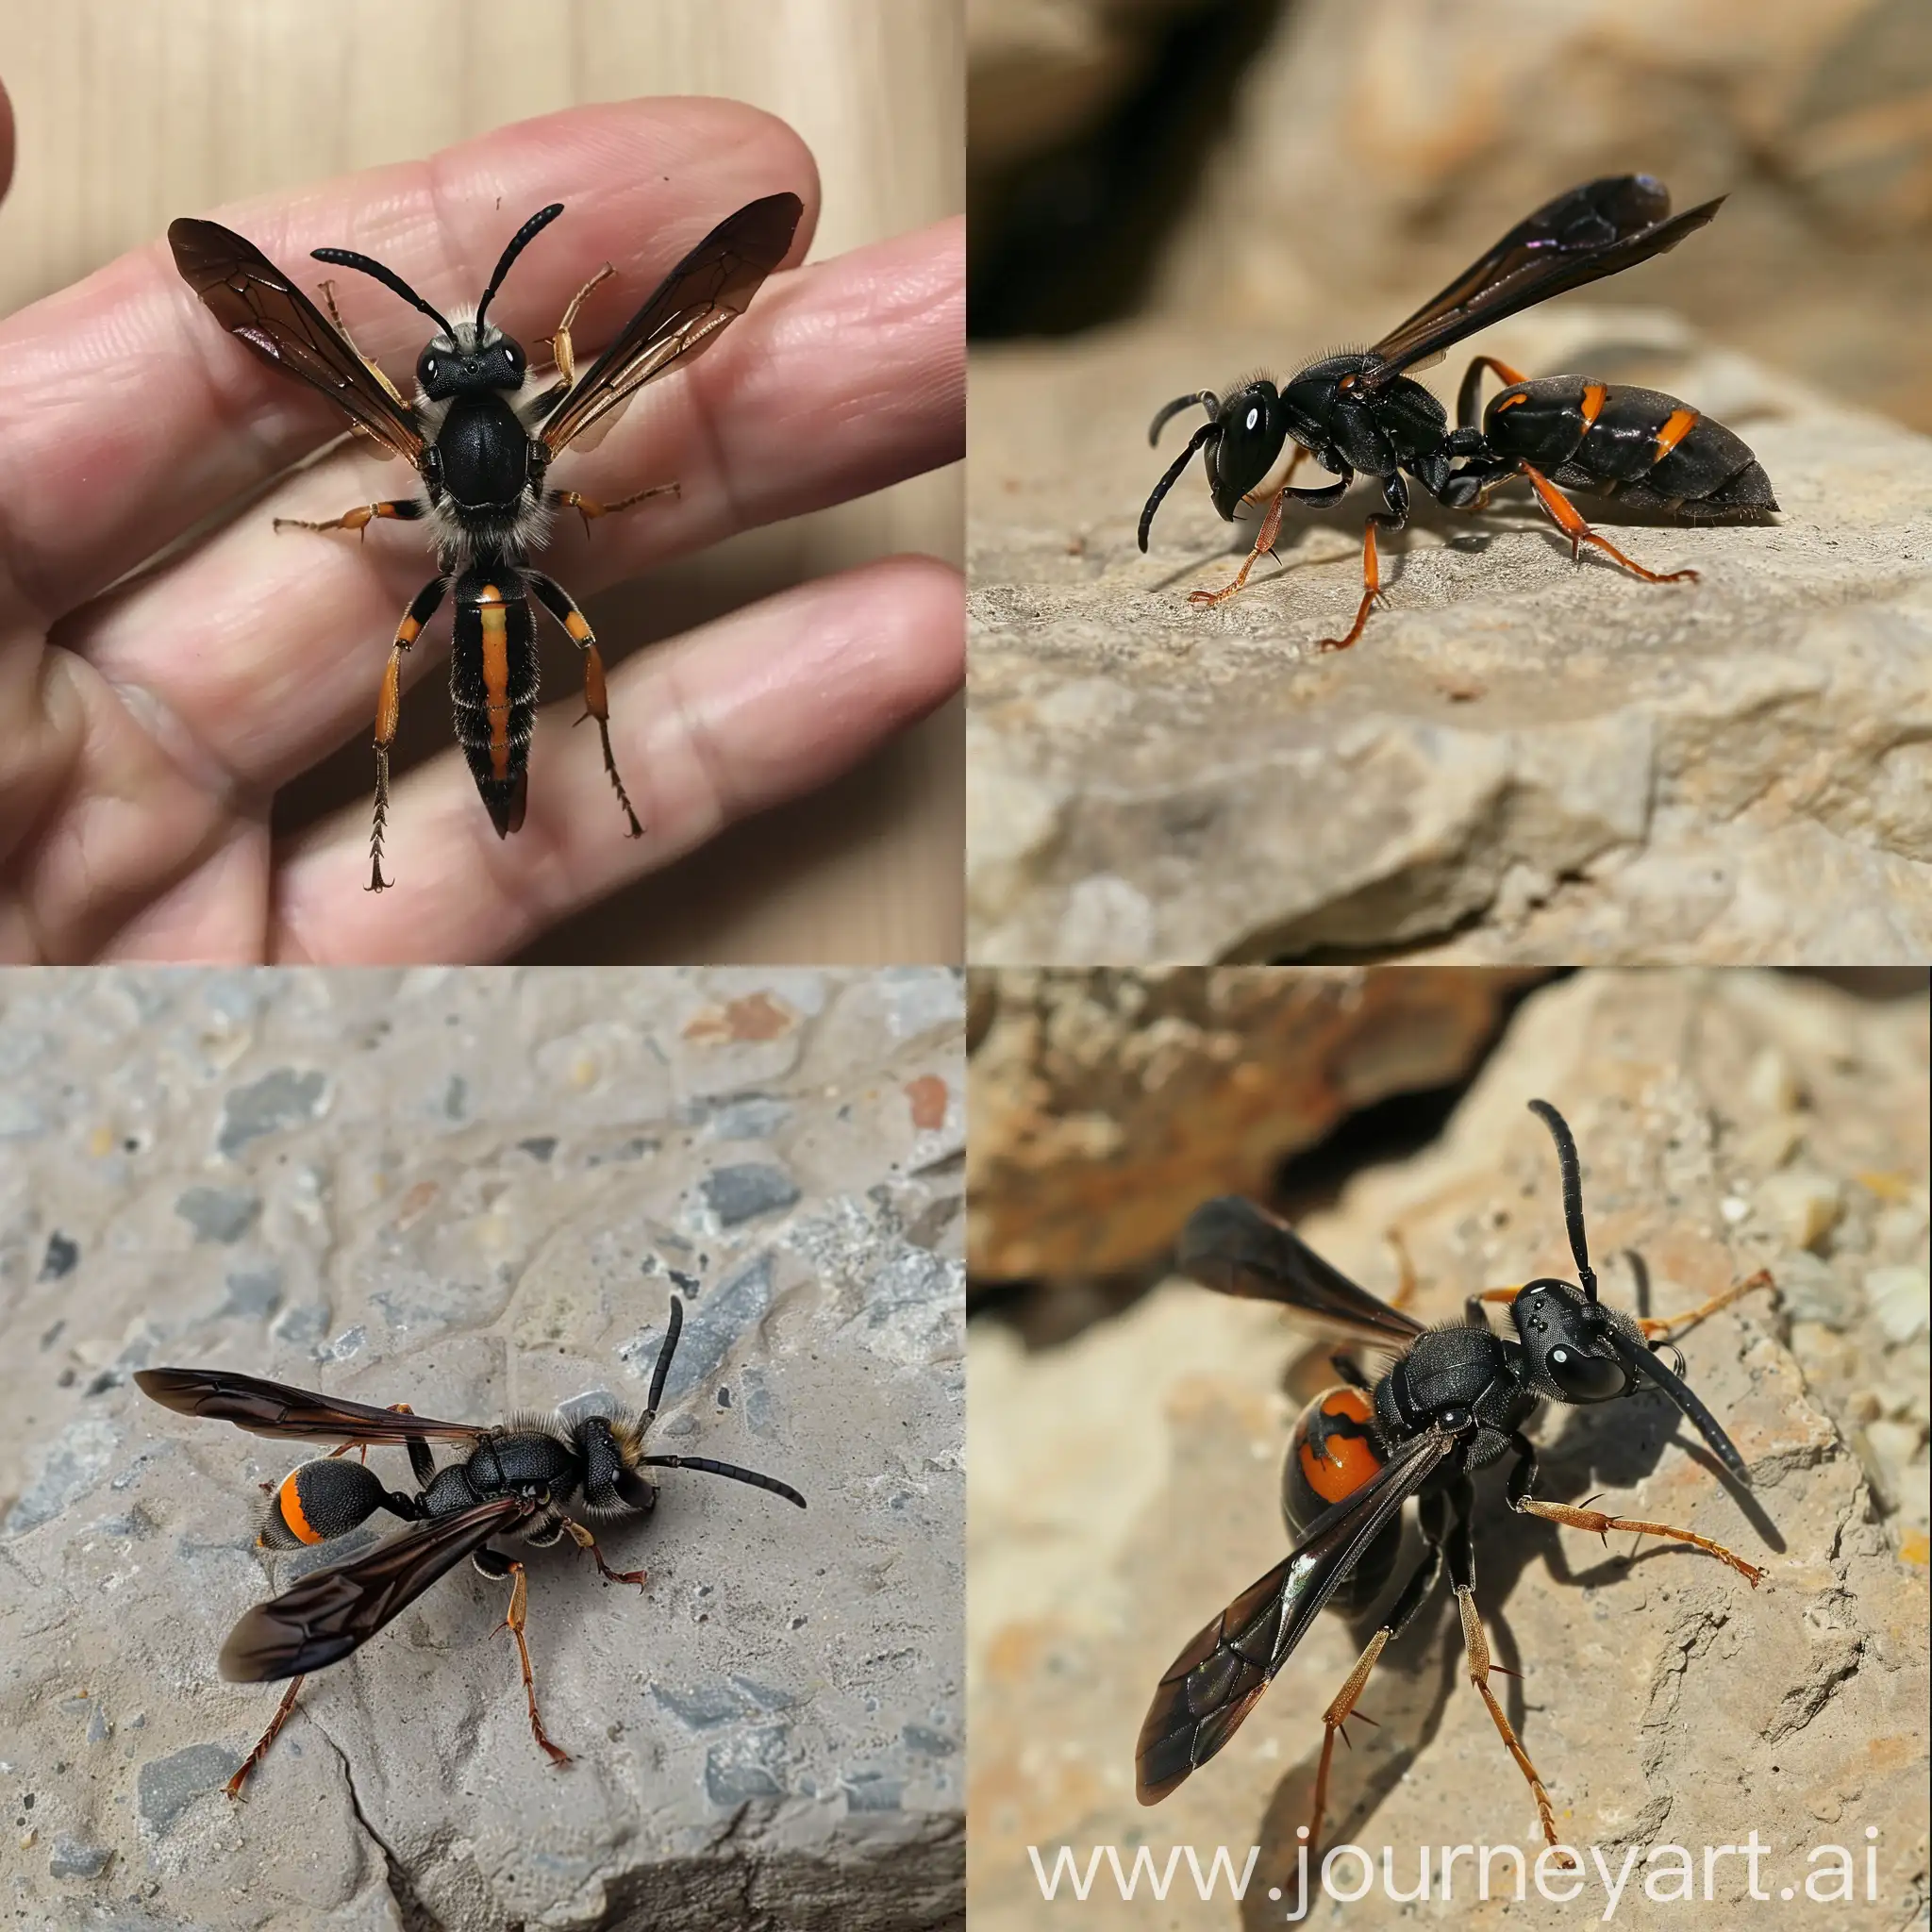 Glowing-FireflyInspired-Black-Wasp-with-Vibrant-Orange-Stripes